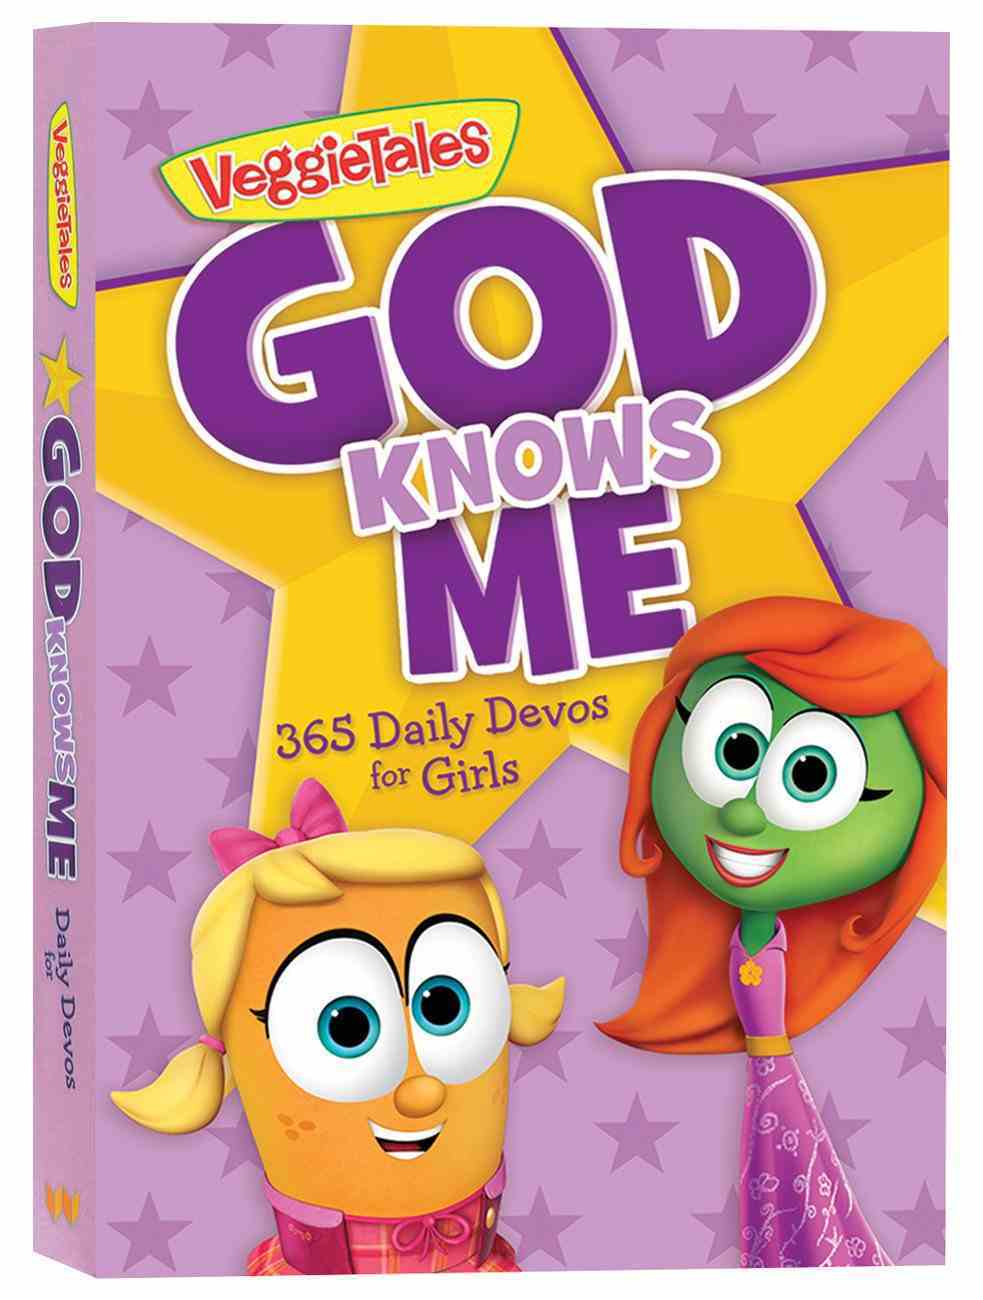 God Knows Me: 365 Daily Devos For Girls (Veggie Tales (Veggietales) Series) Paperback